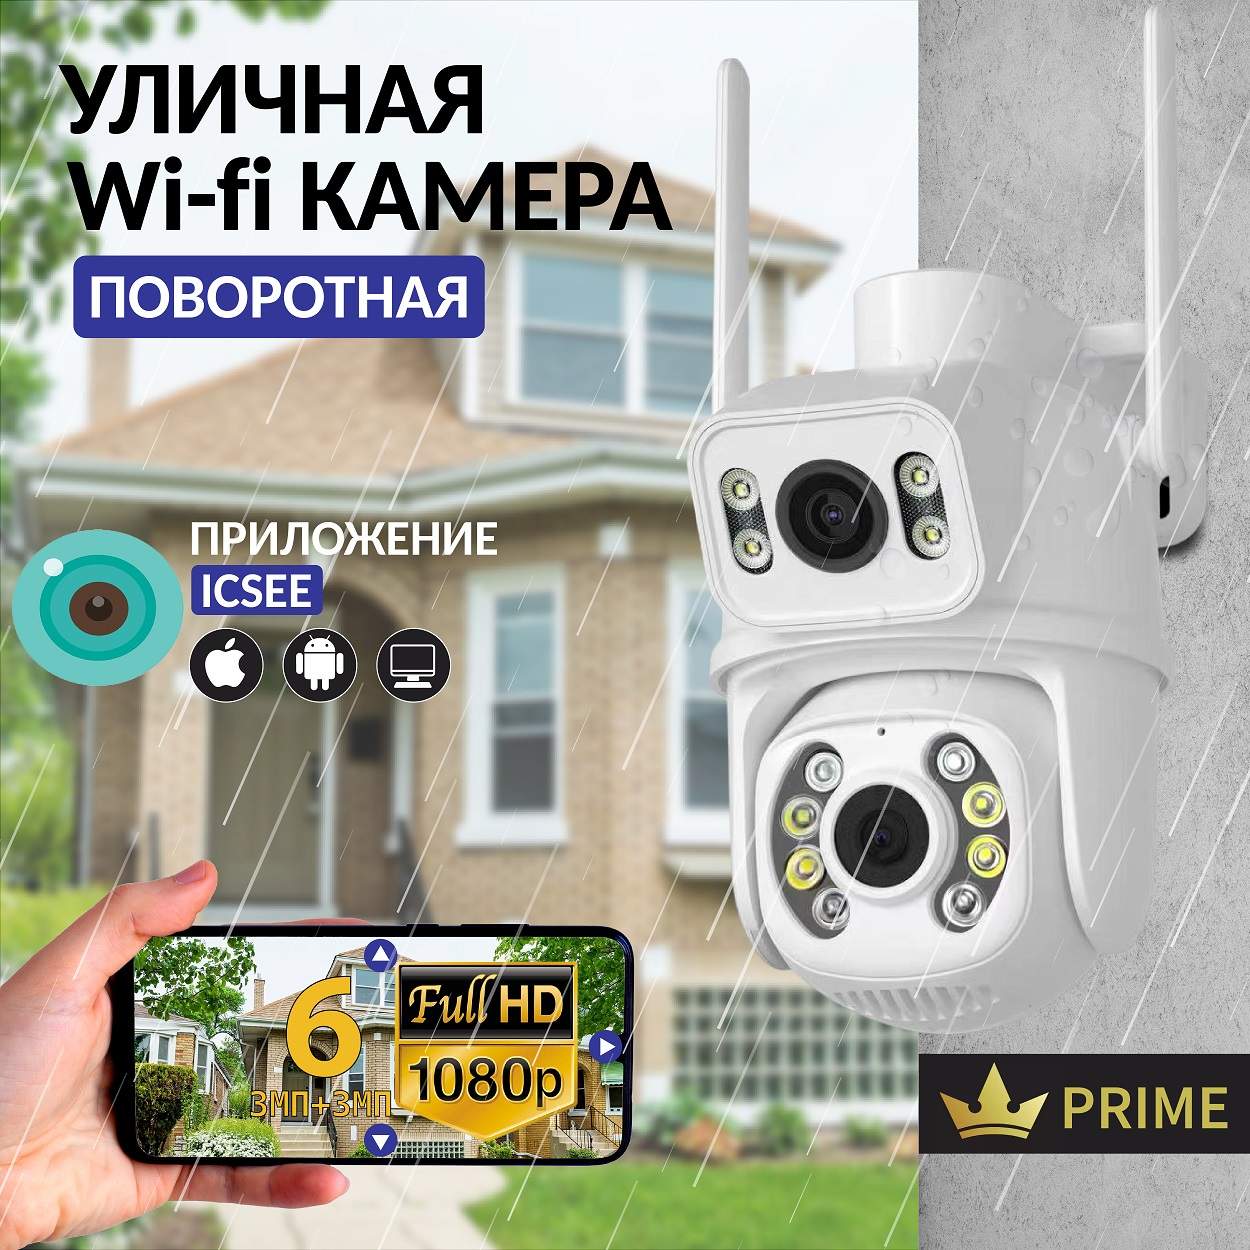 беспроводная камера видеонаблюдения zodikam 3155w уличная wi fi 5мп Камера видеонаблюдения Wifi уличная поворотная wifi 6 мп (3Мп + 3Мп)